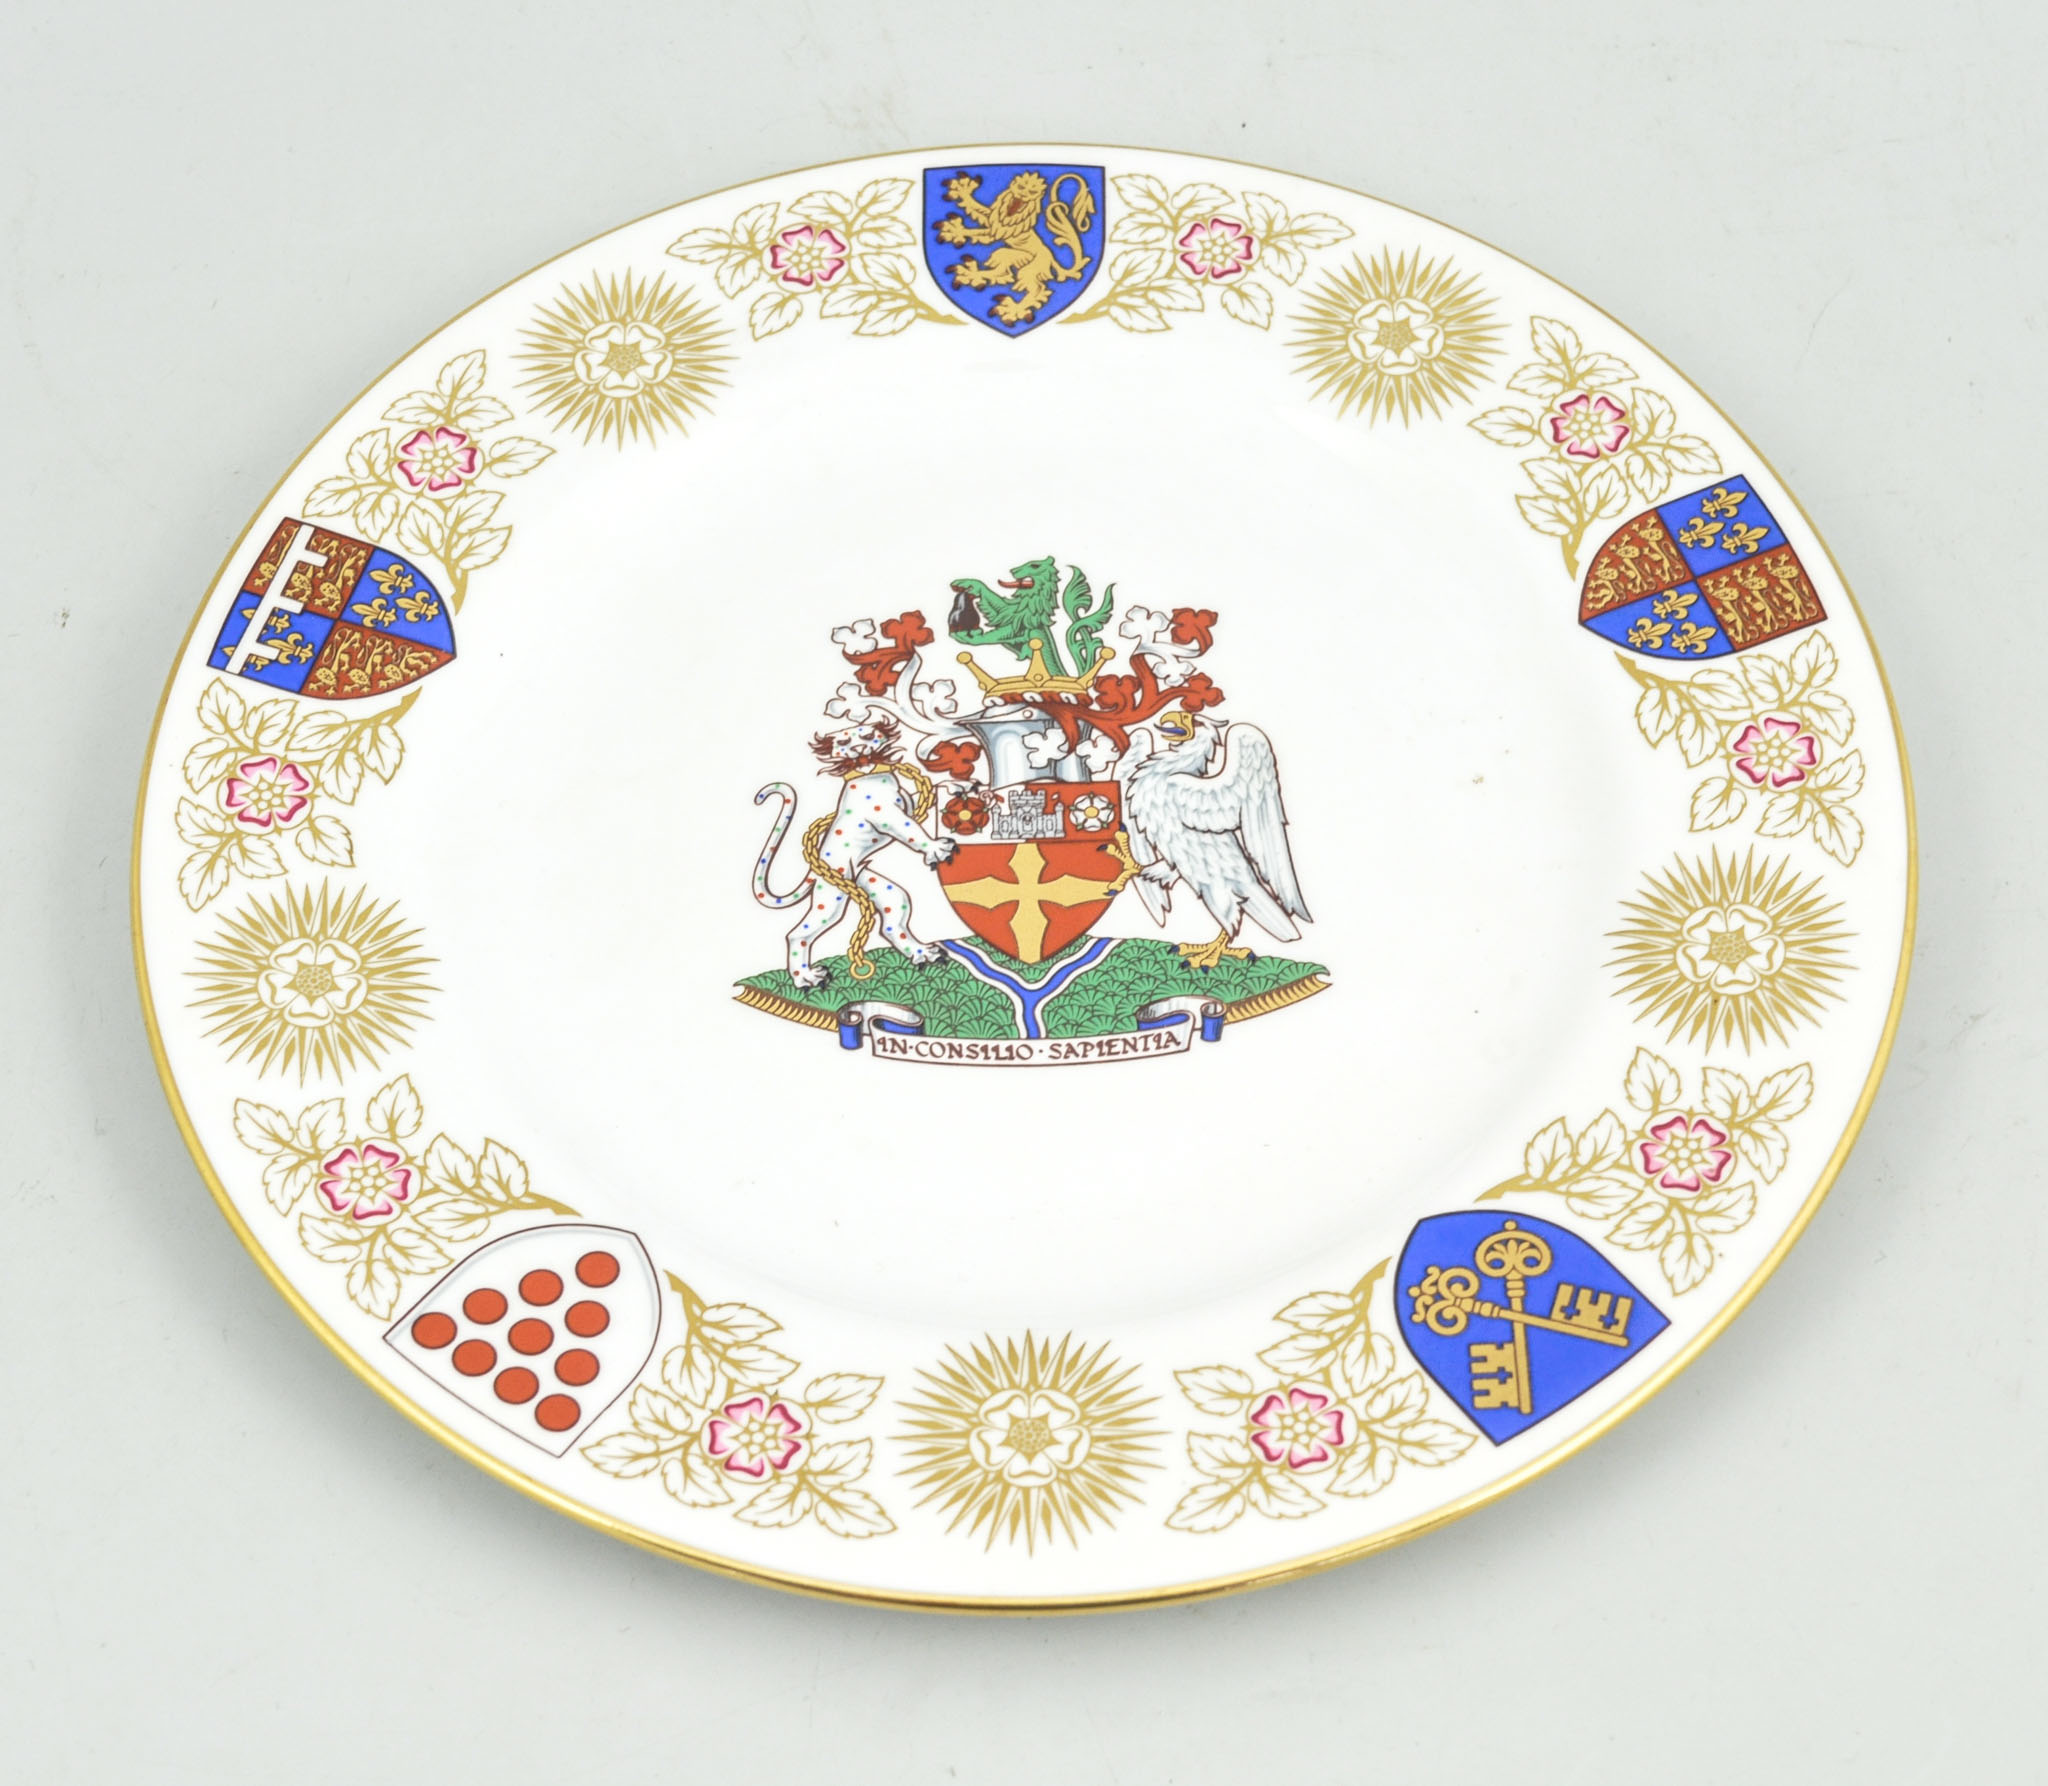 Spode commemorative plate, The Tewkesbury Plate, 1971, diameter 27cm,